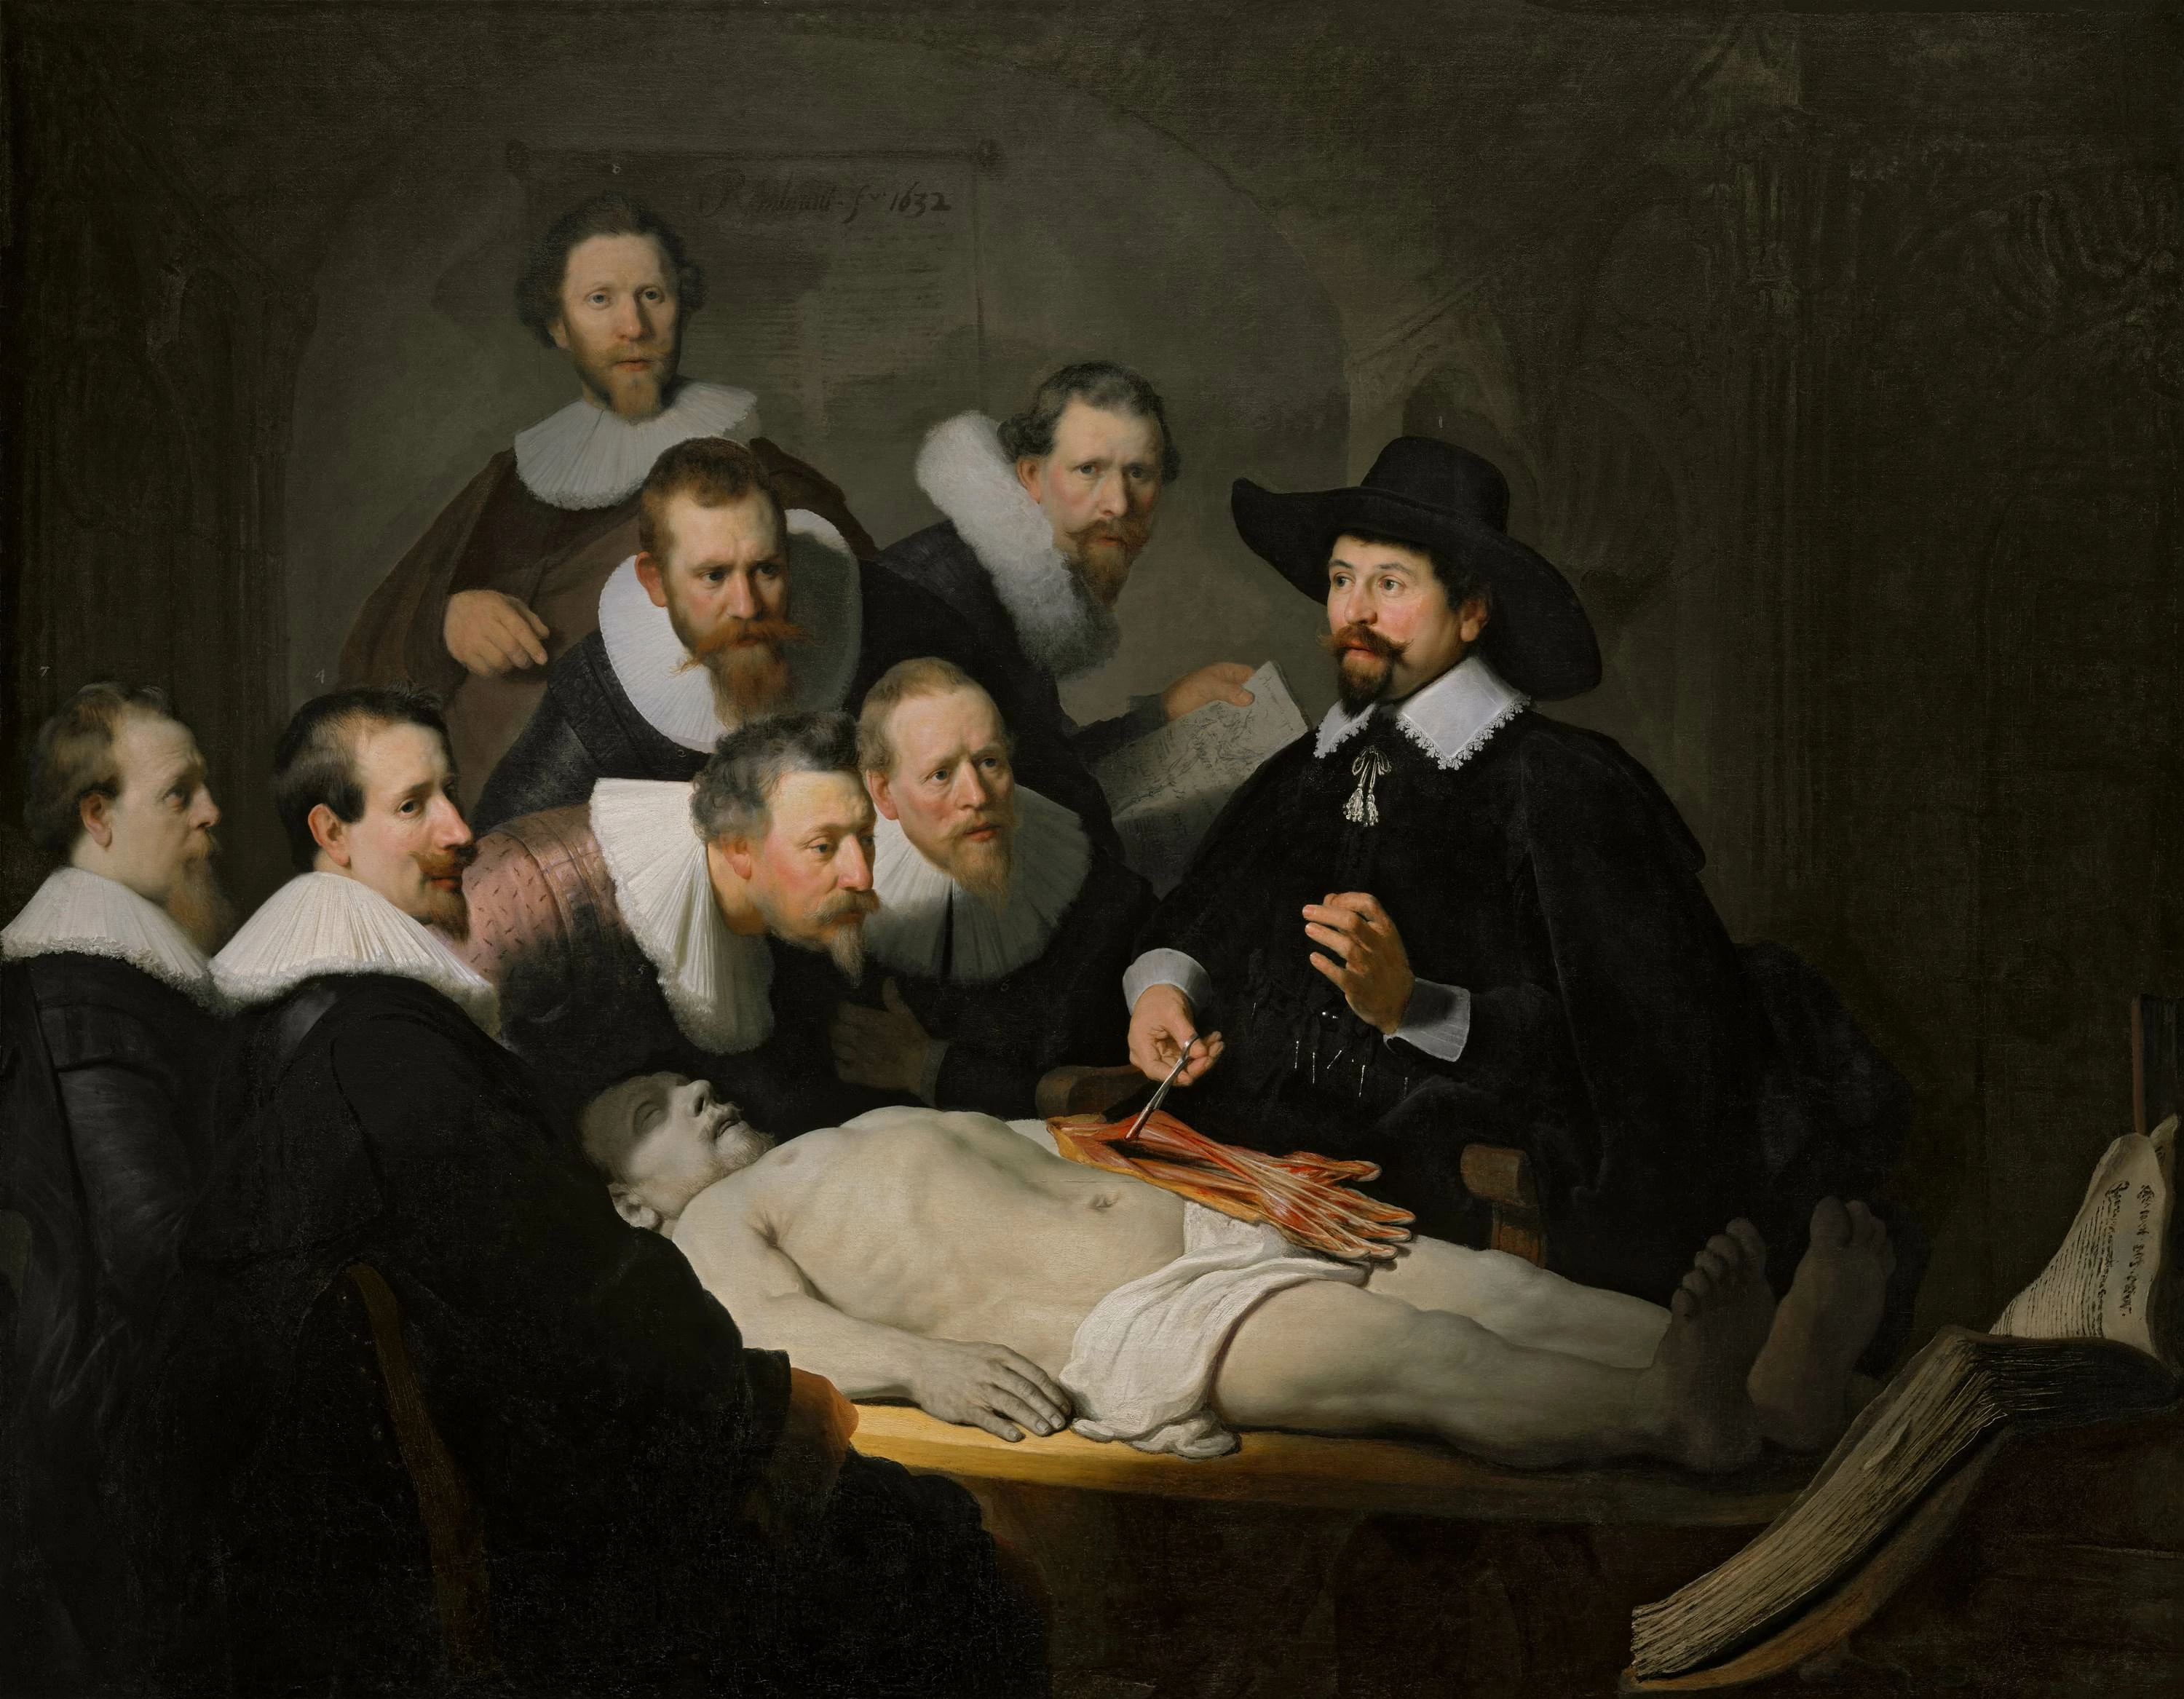 Rembrandt van Rijn, The Artists